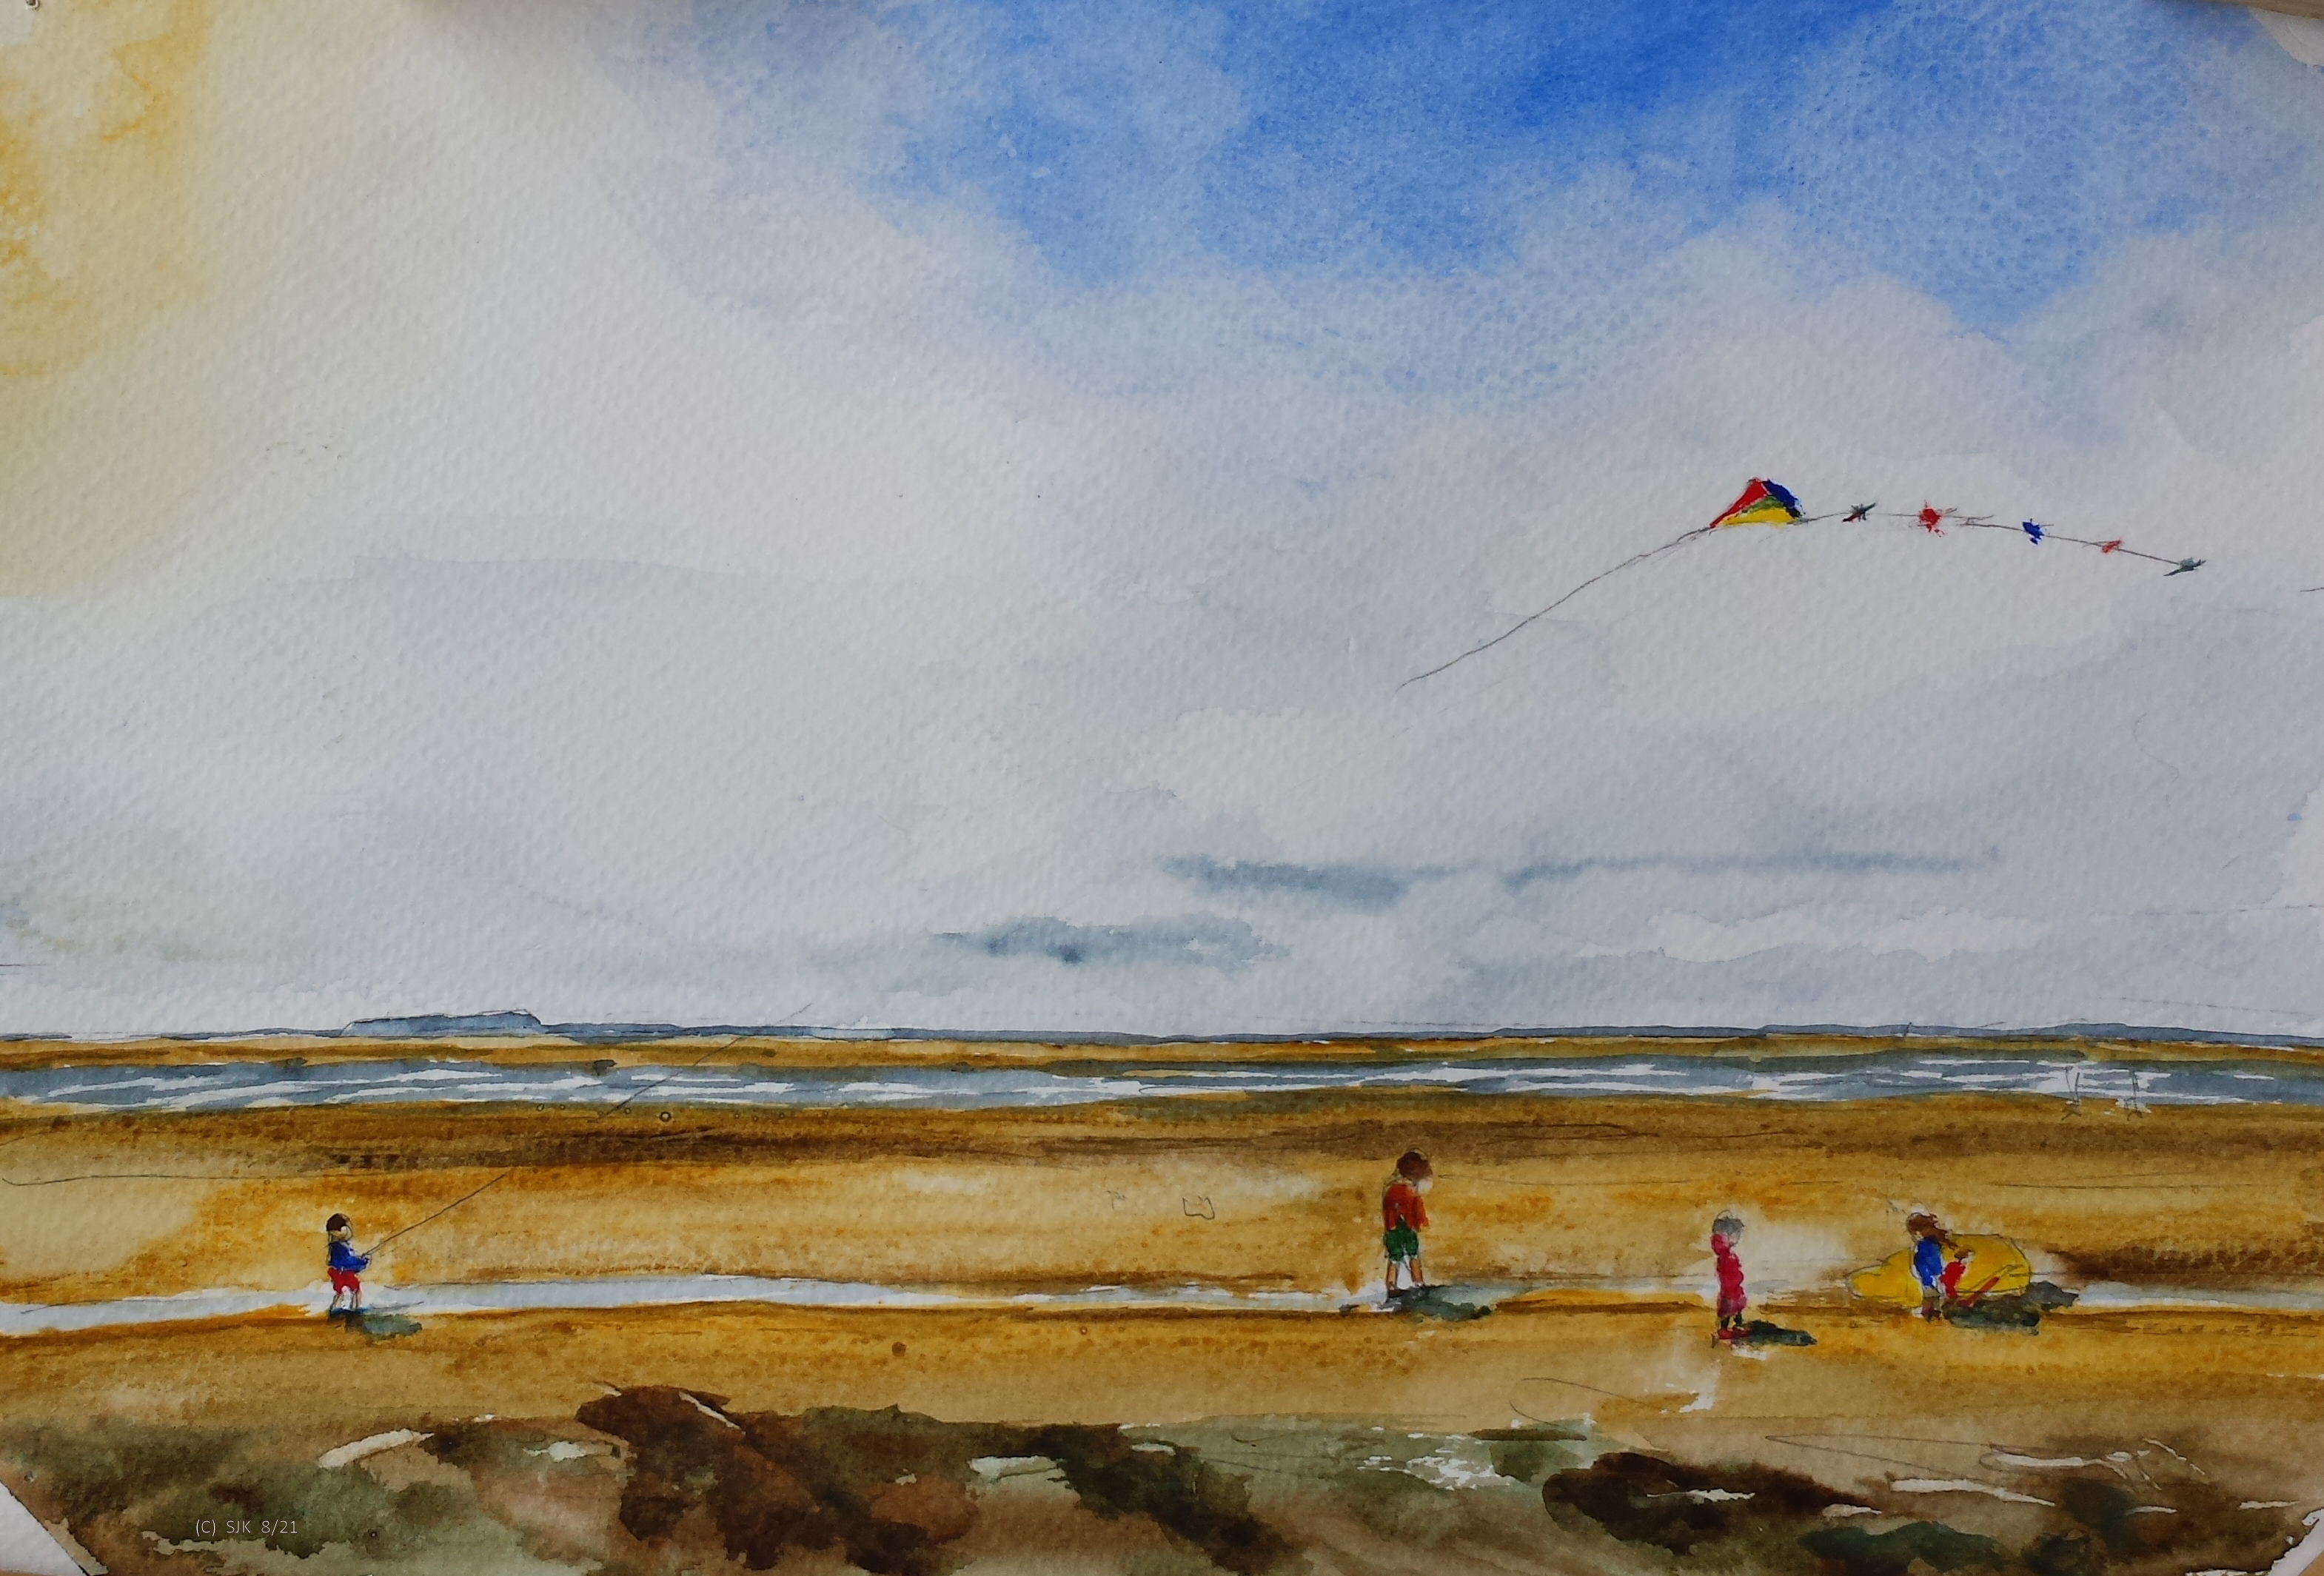 3064  Fly a kite at Sand Bay